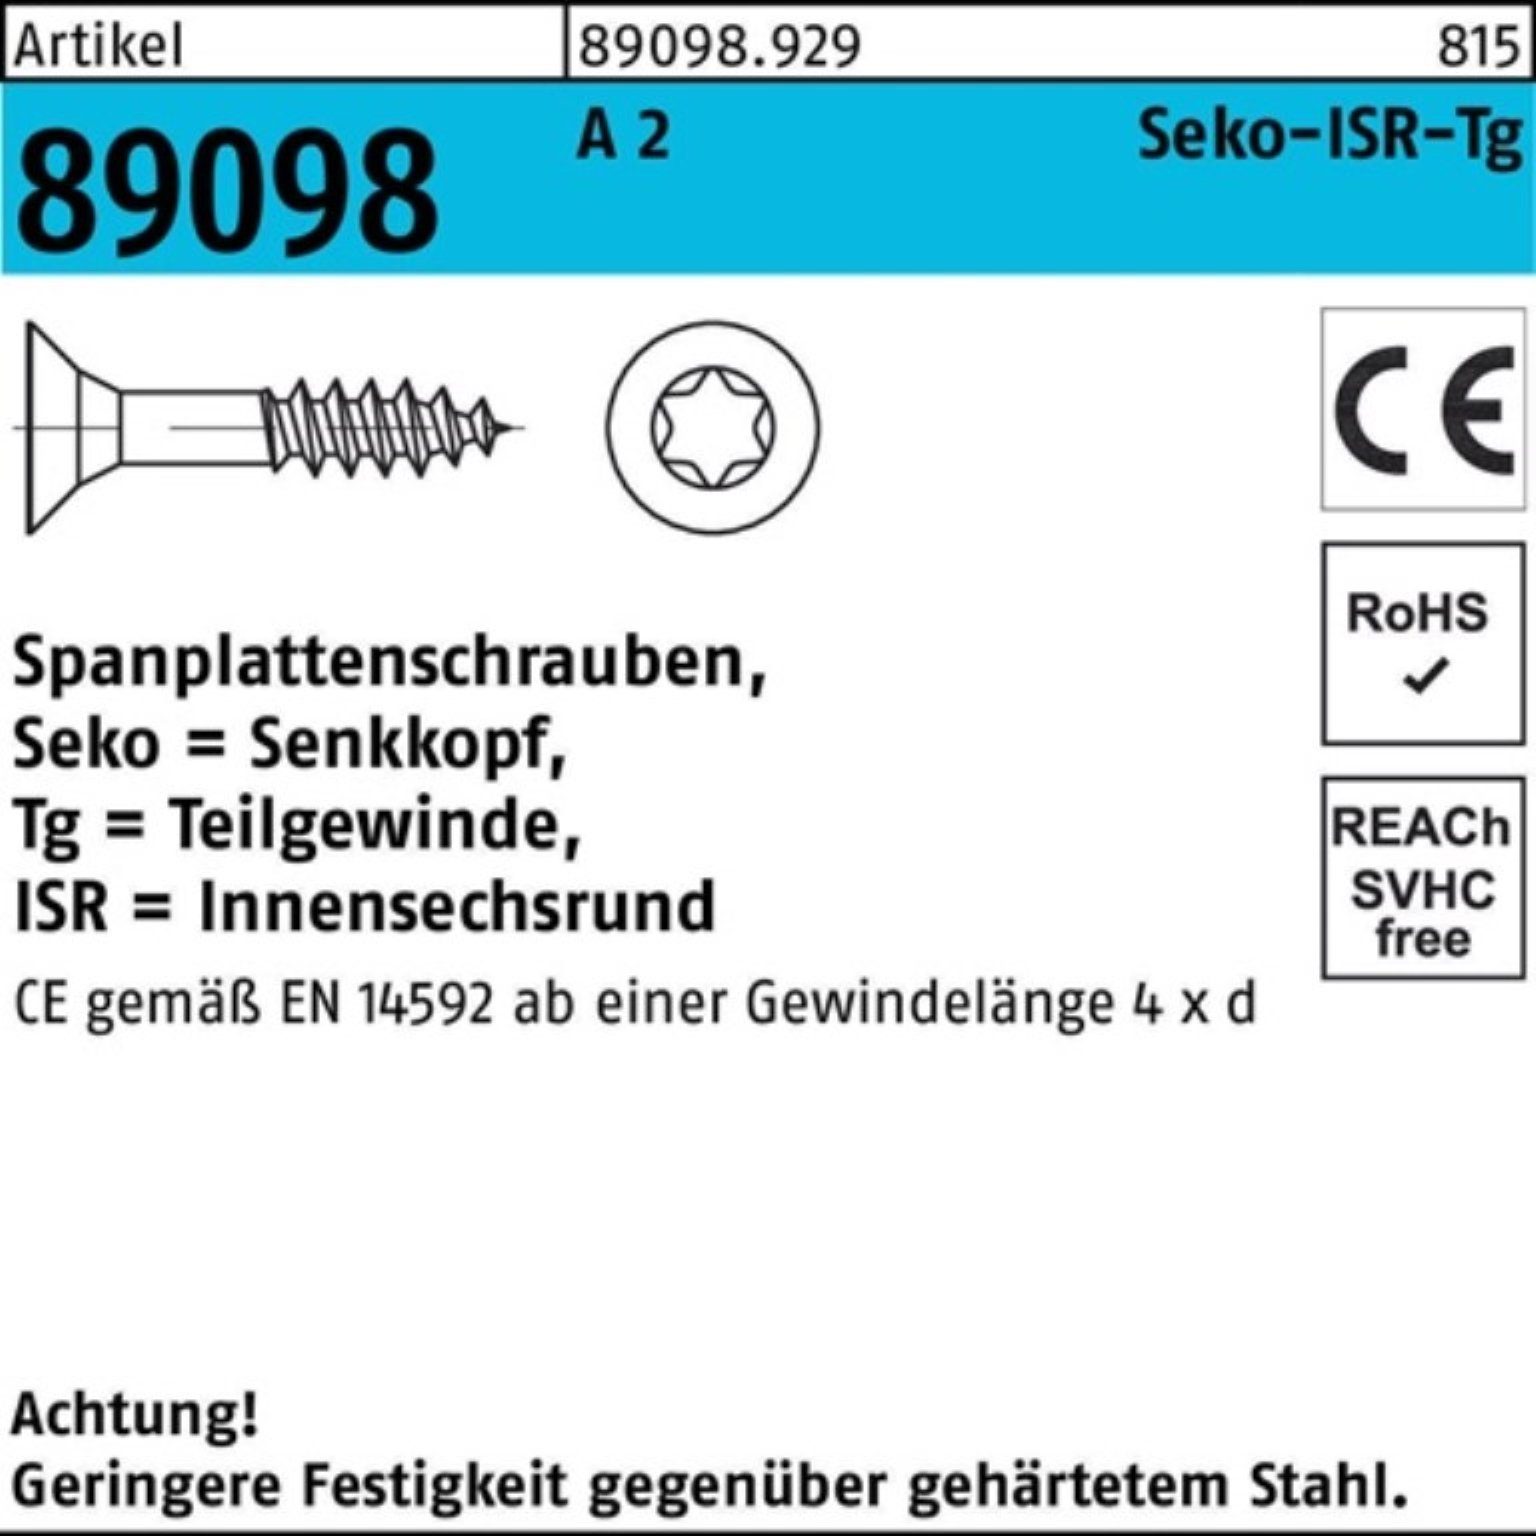 Top-Produkt Reyher Spanplattenschraube 200er Pack Spanplattenschraube 60-T25 R 6x SEKO 89098 A S 2 200 TG ISR